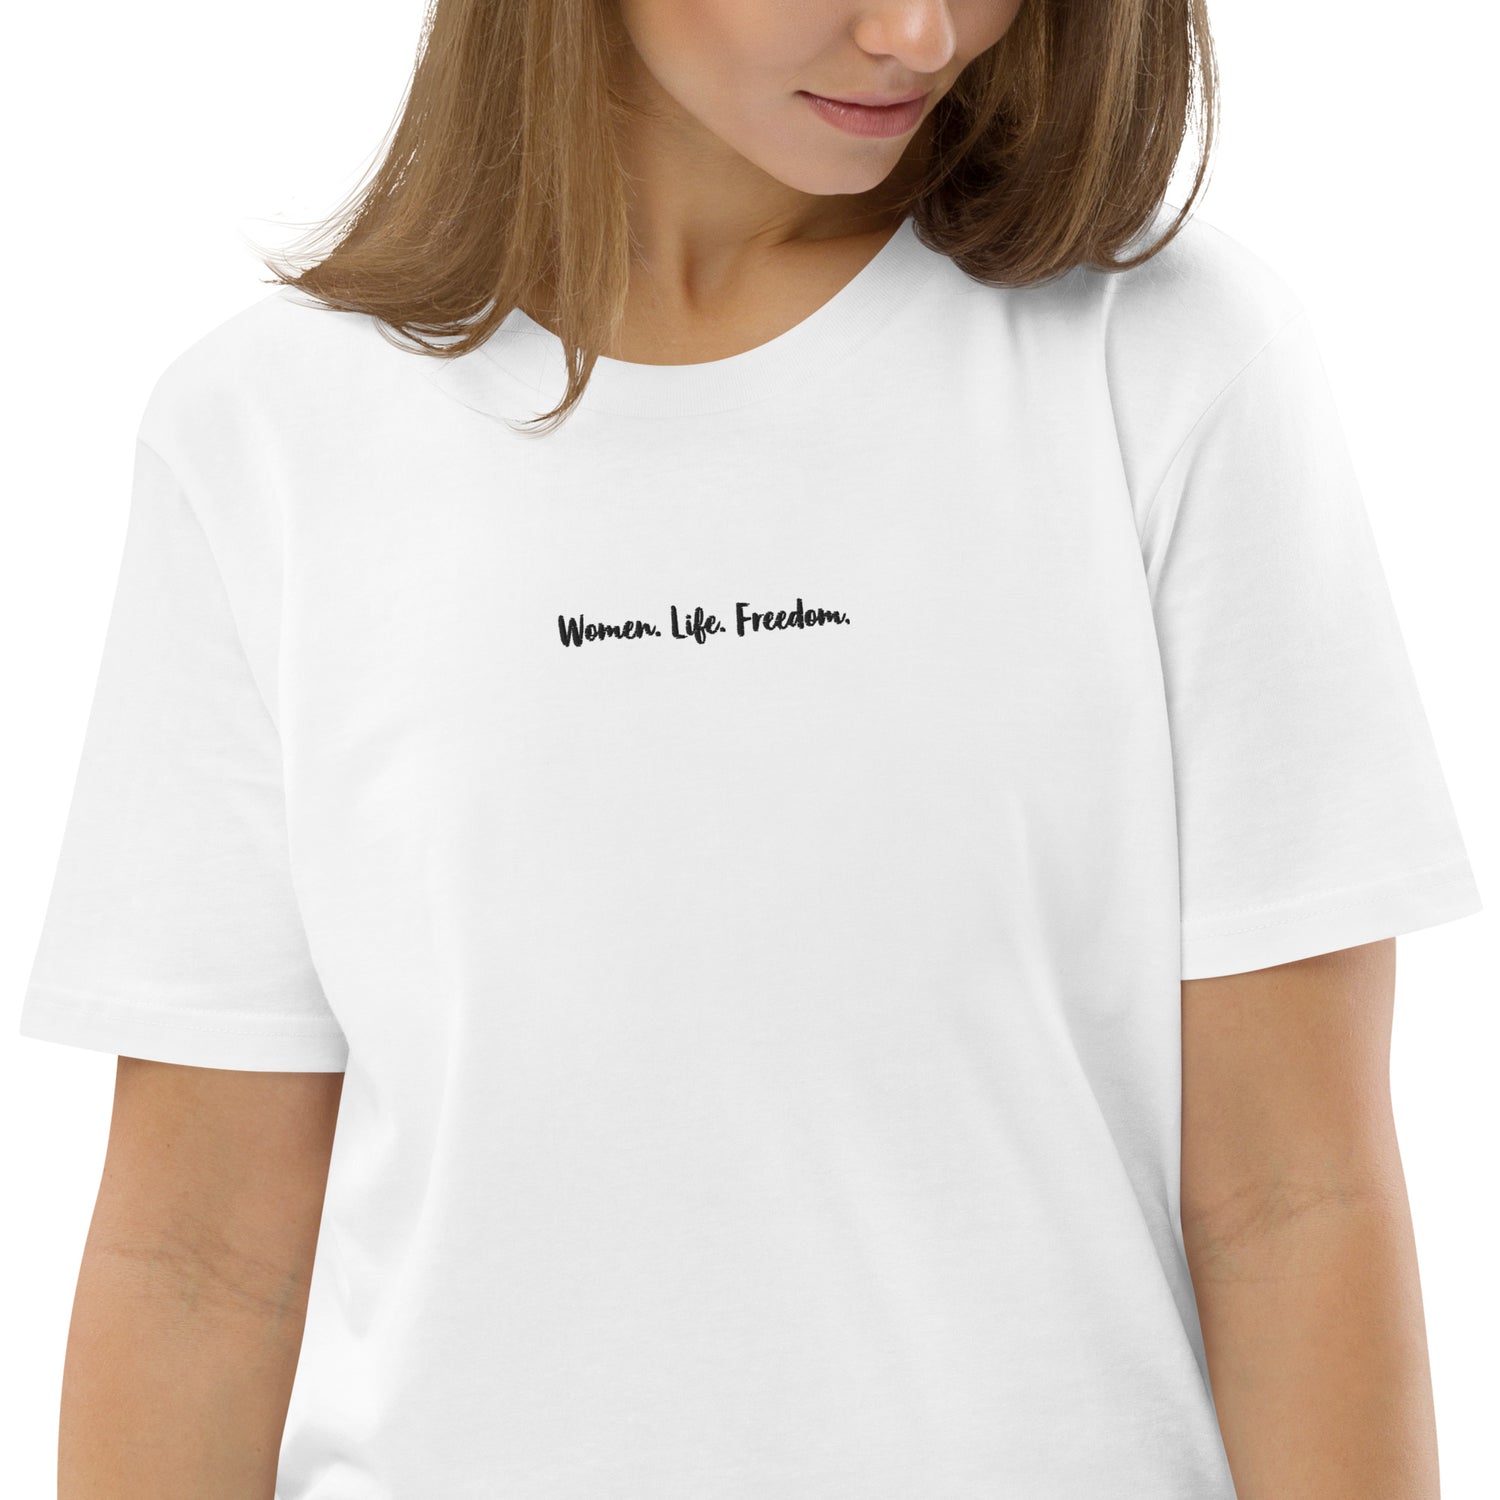 Female Power T-shirts